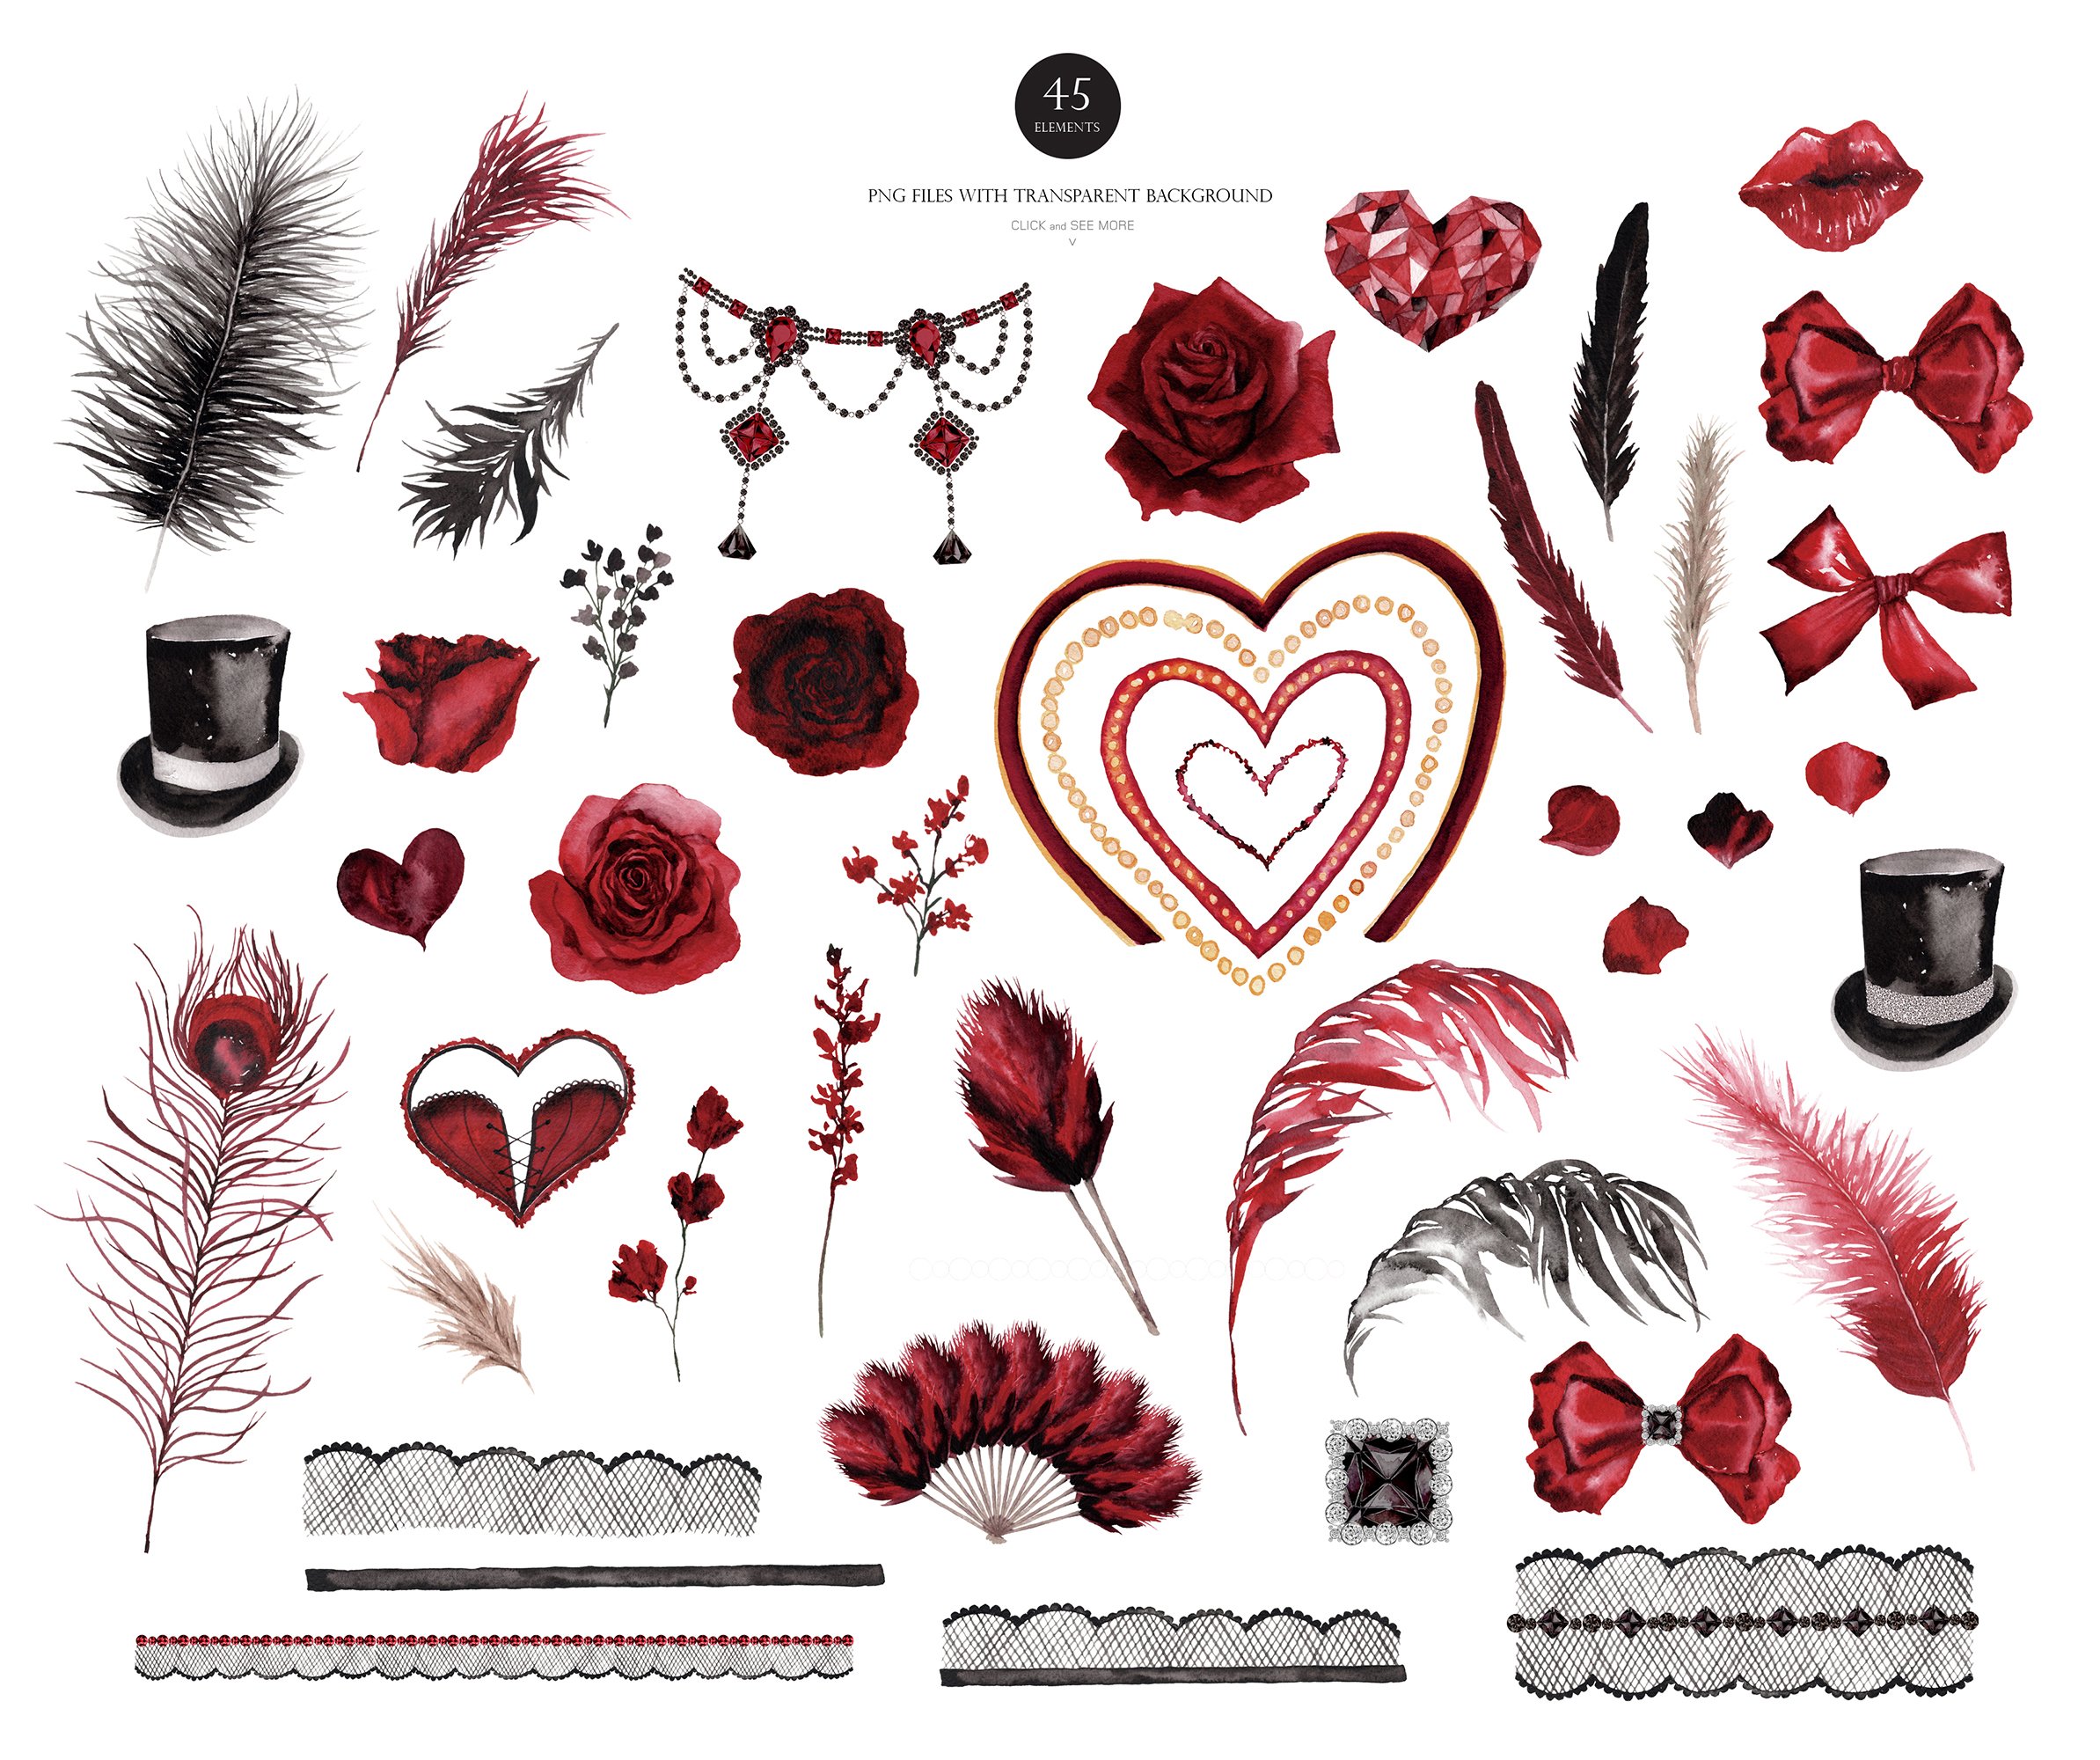 Diverse of elements for Moulin Rouge illustration.